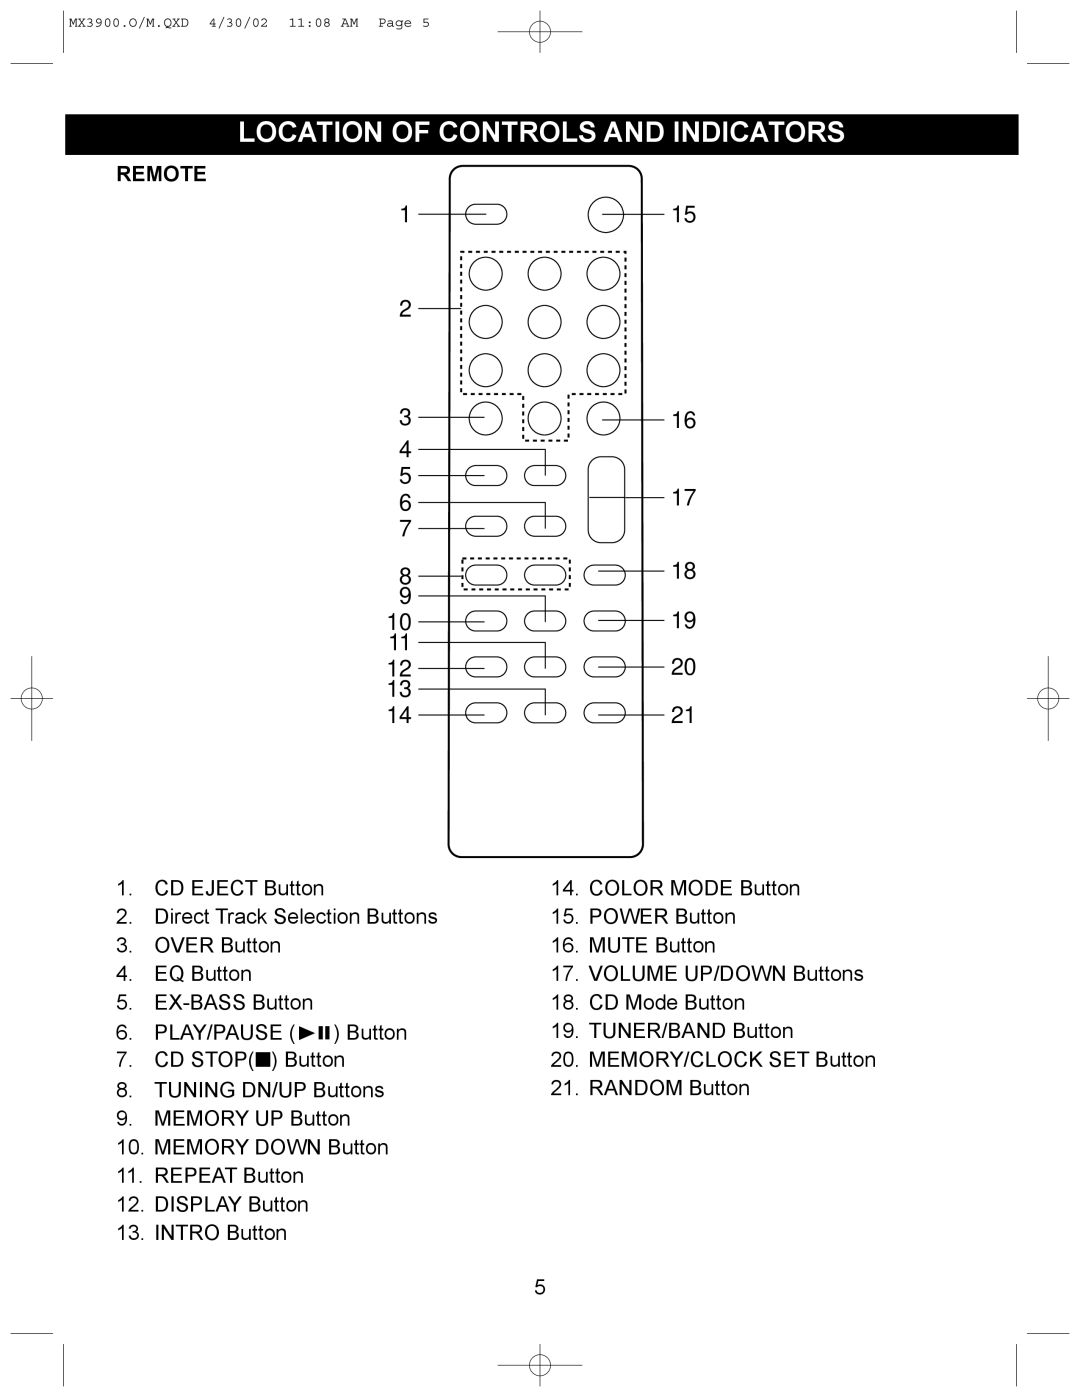 Memorex MX3900 operating instructions Remote, Location Of Controls And Indicators, 1 1 1 1 